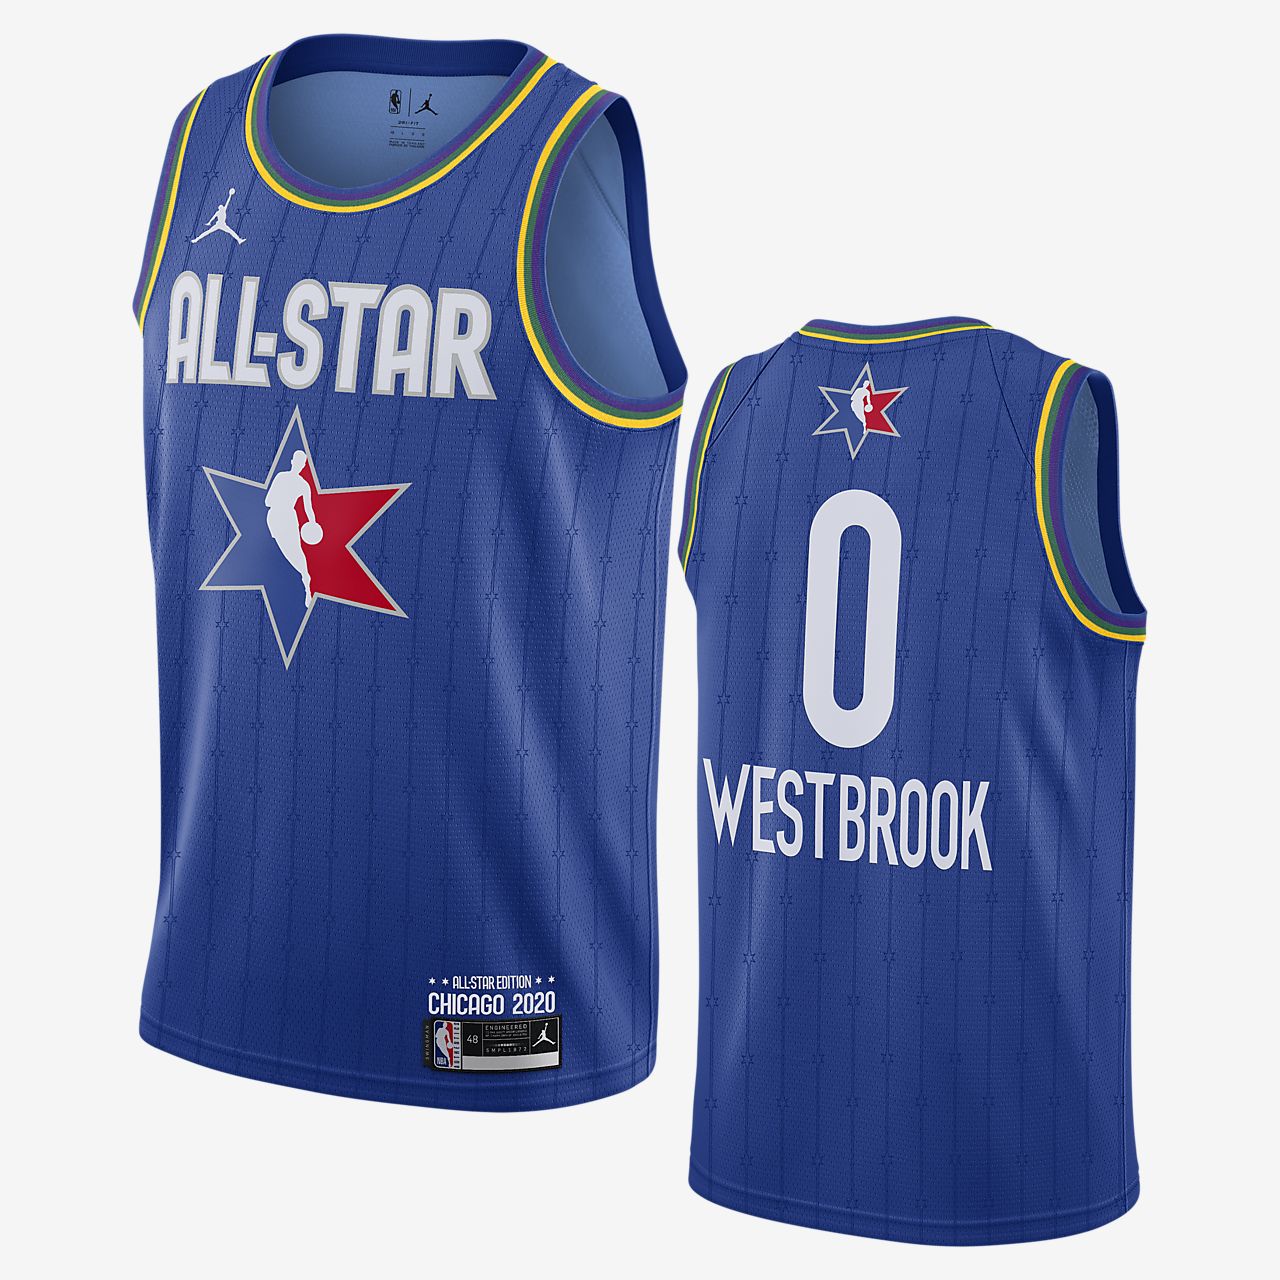 russell westbrook shirt jordan